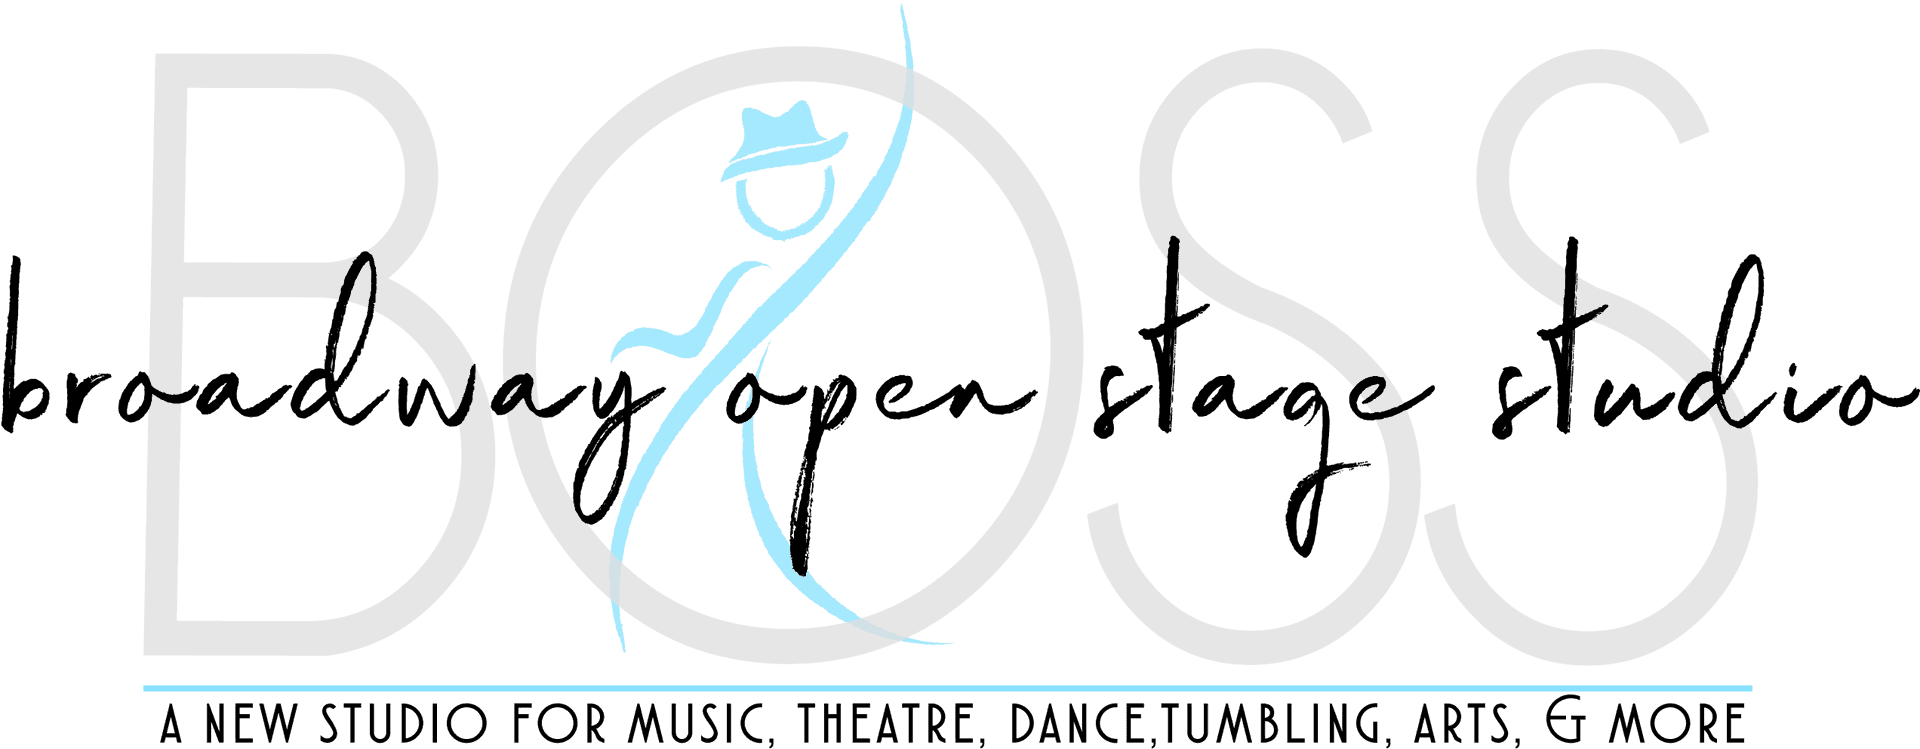 Broadway Open Stage Studio Logo PNG